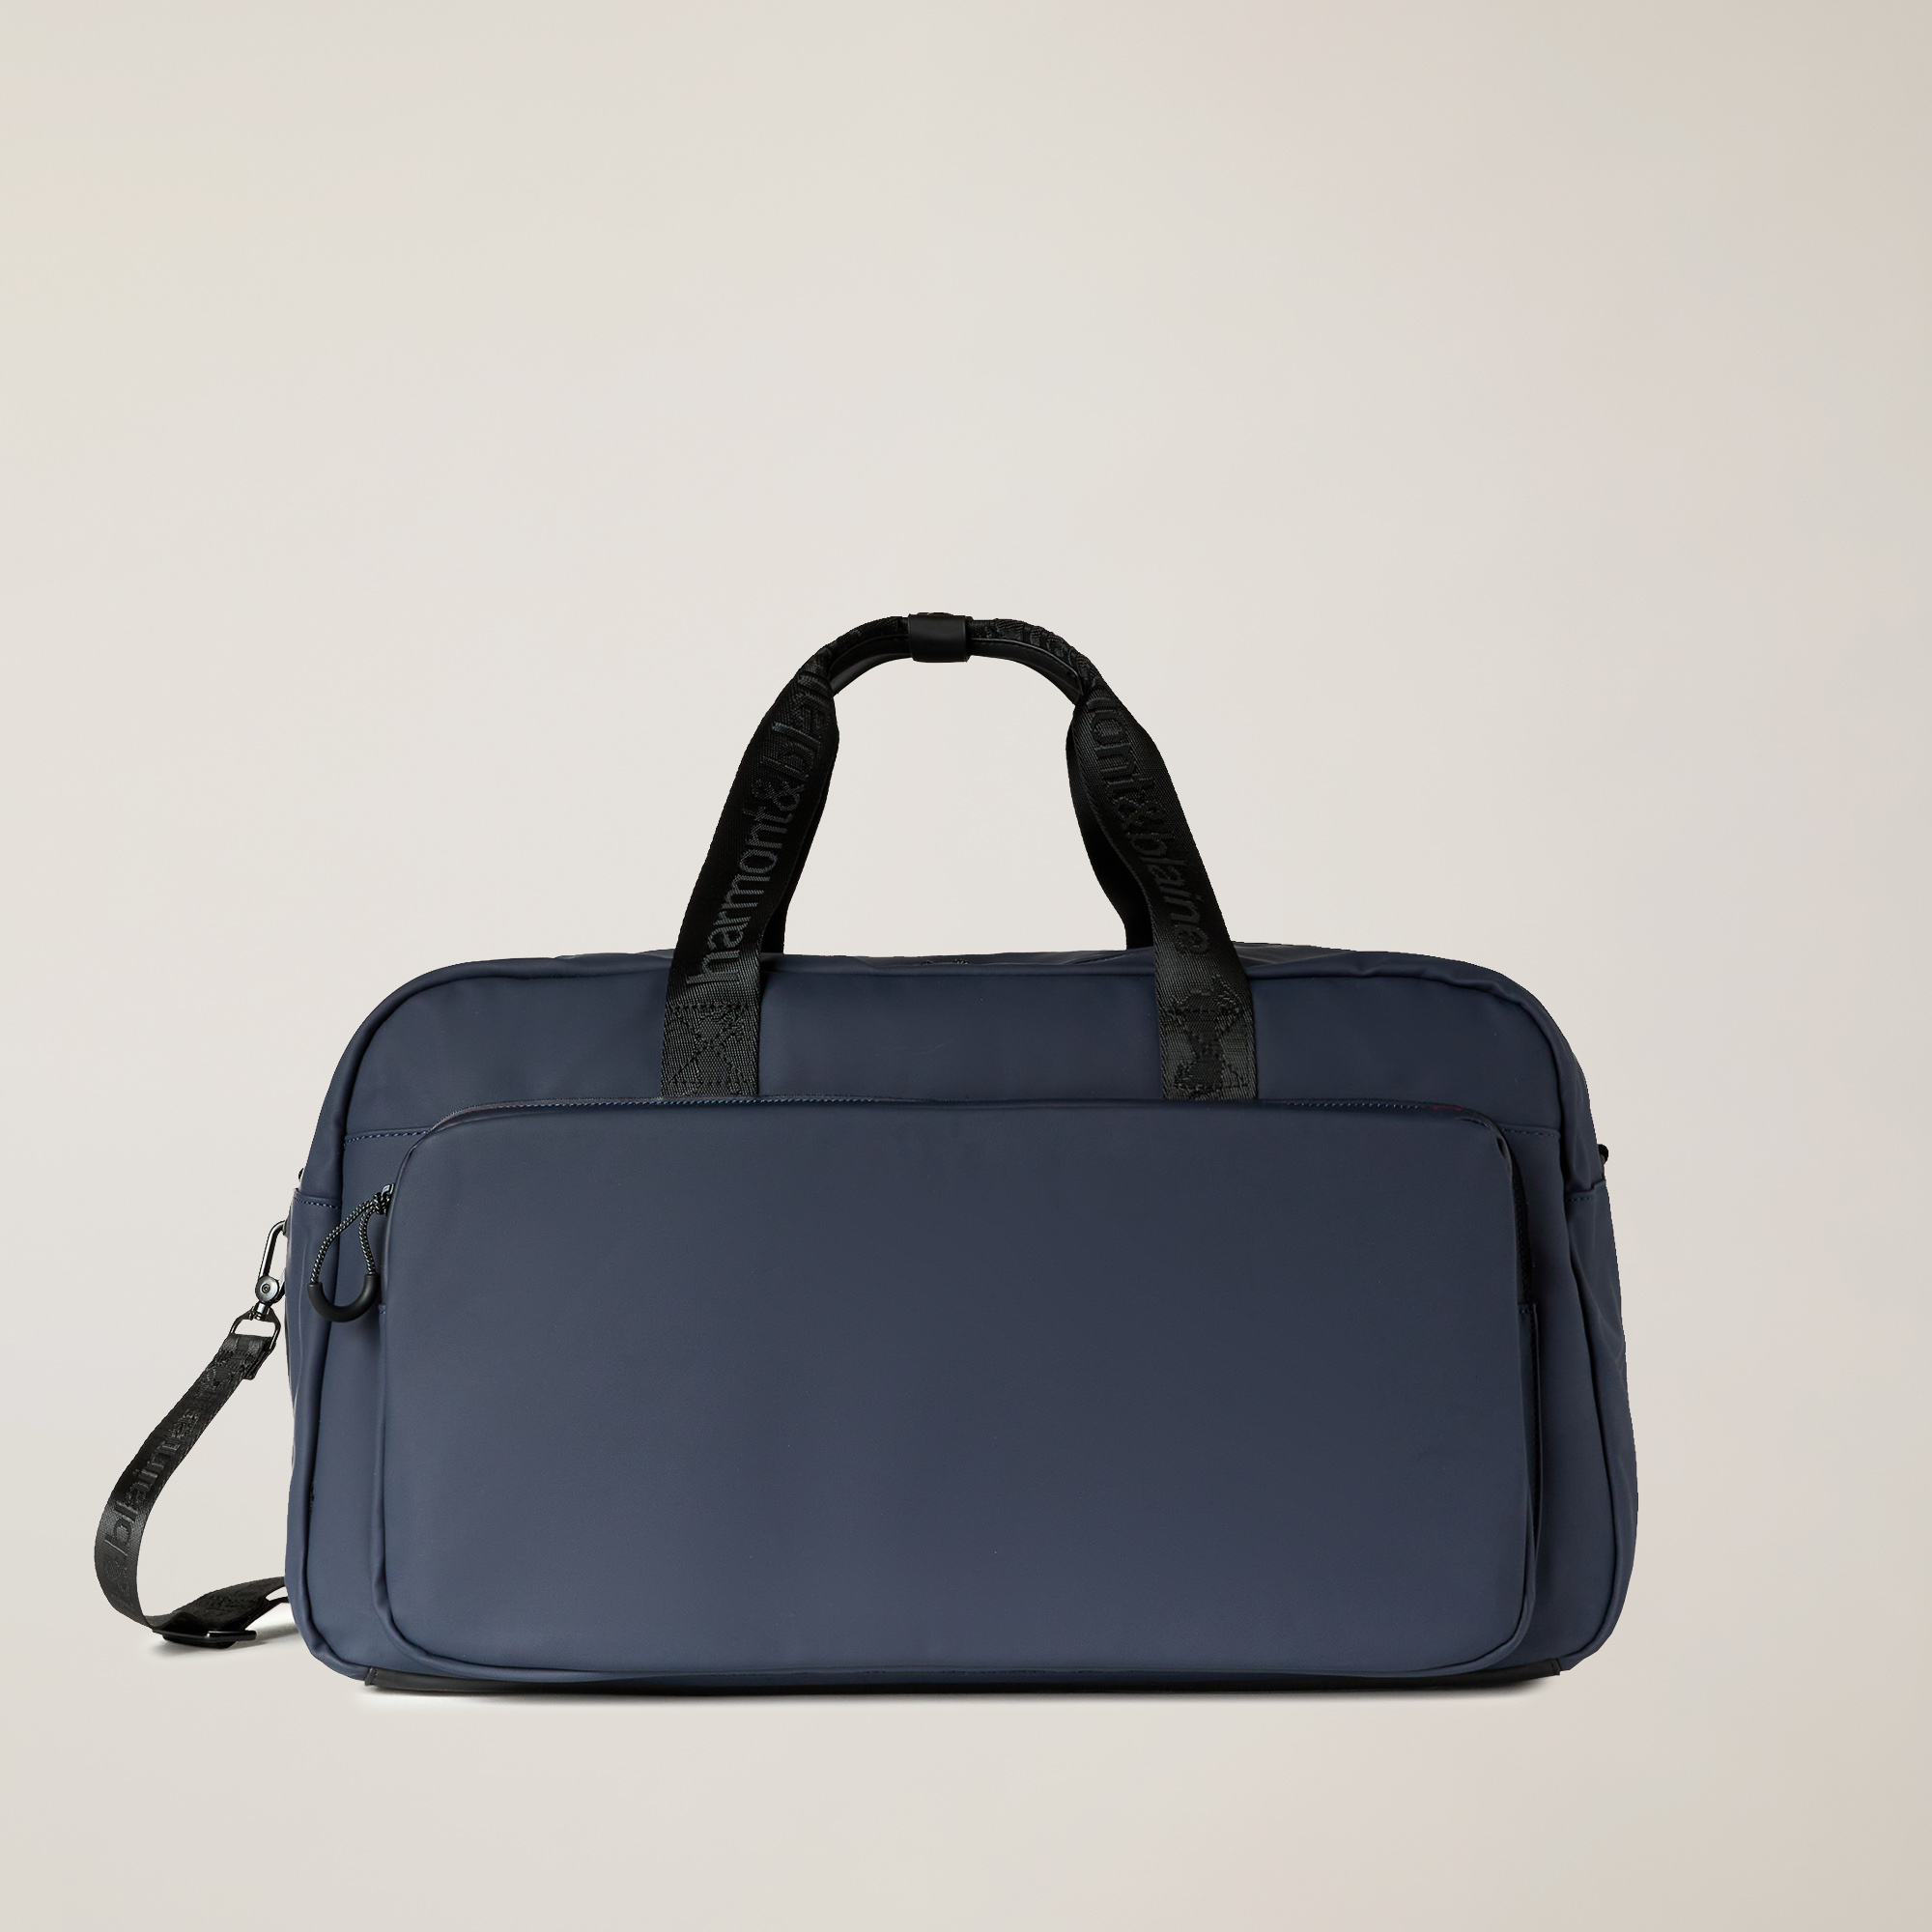 Duffel Bag With Branded Details, Blue, large image number 0